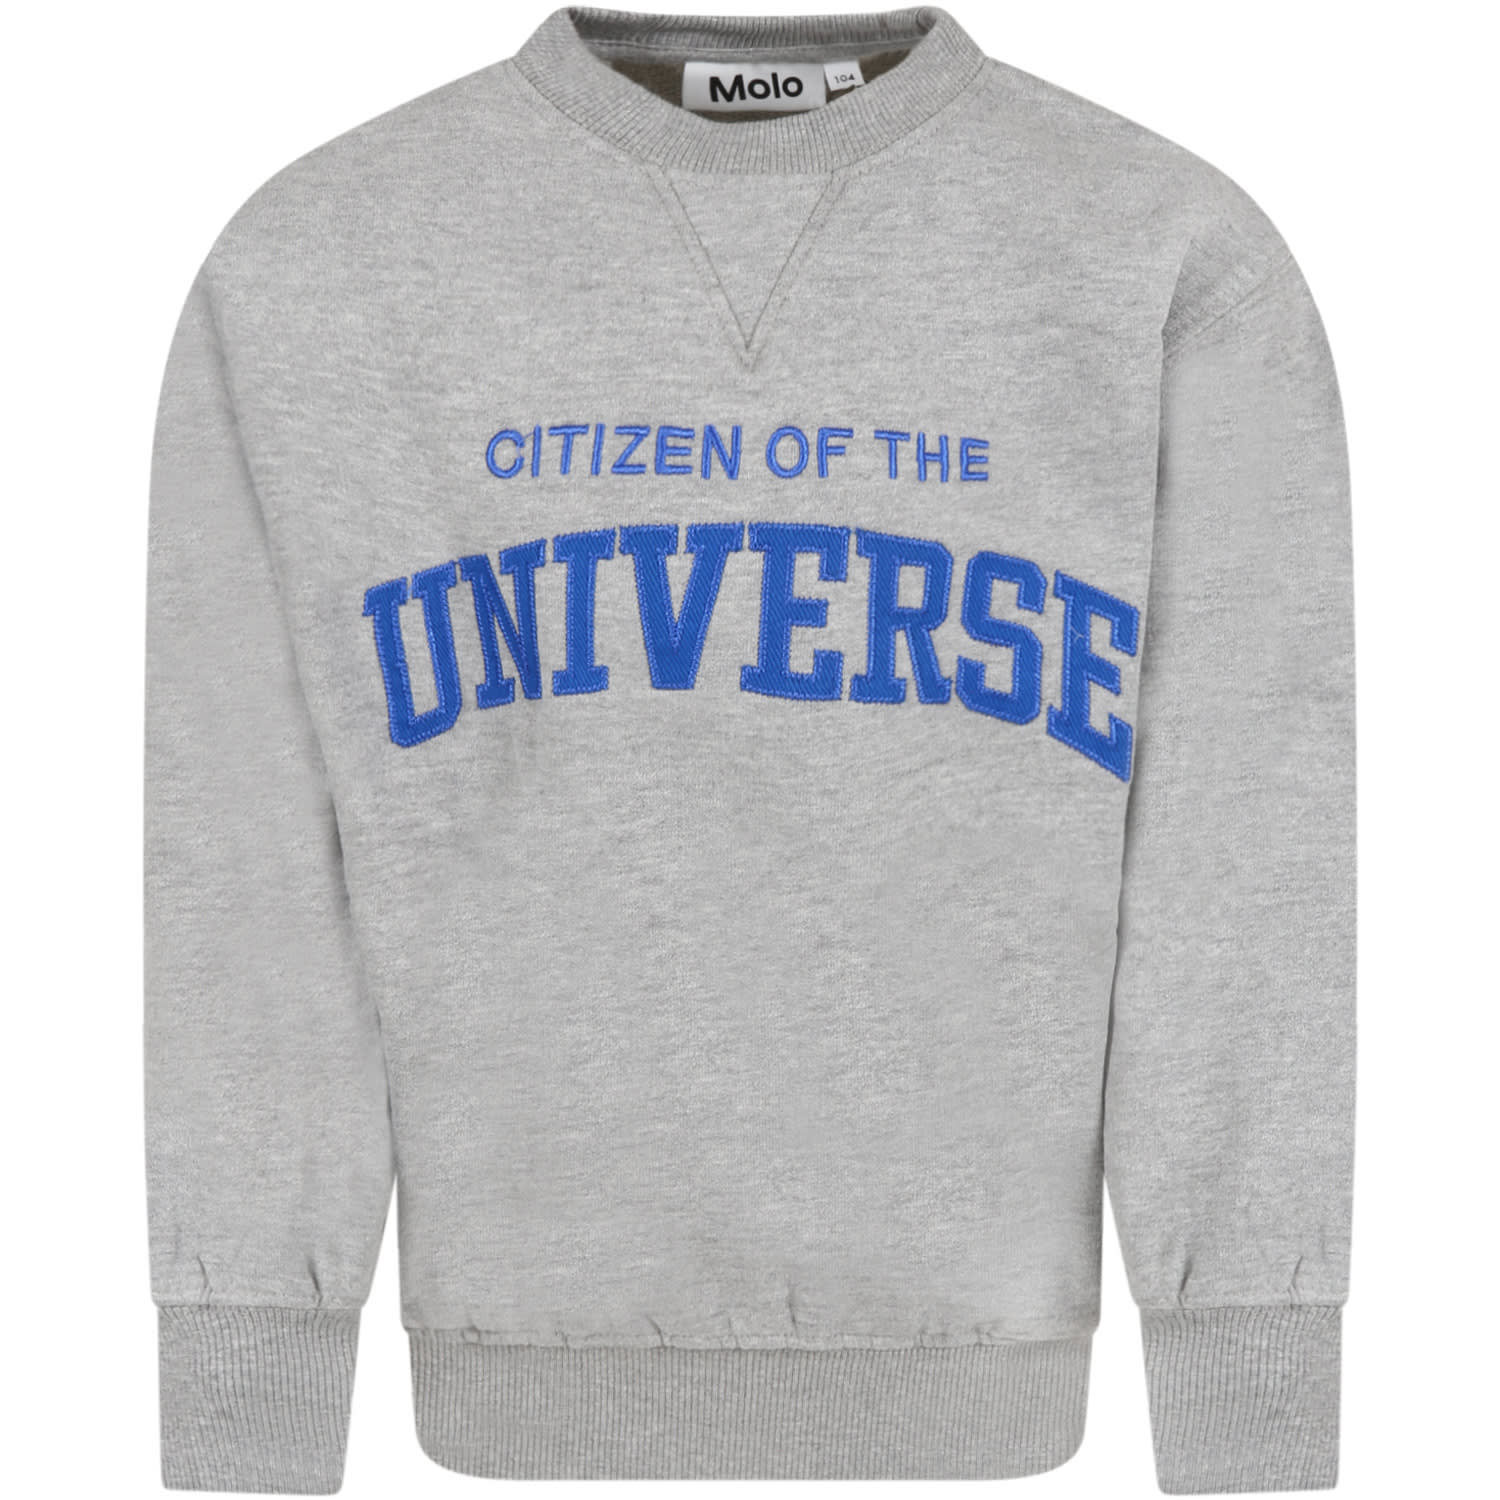 Molo Grey Sweatshirt For Kids With Blue Writing